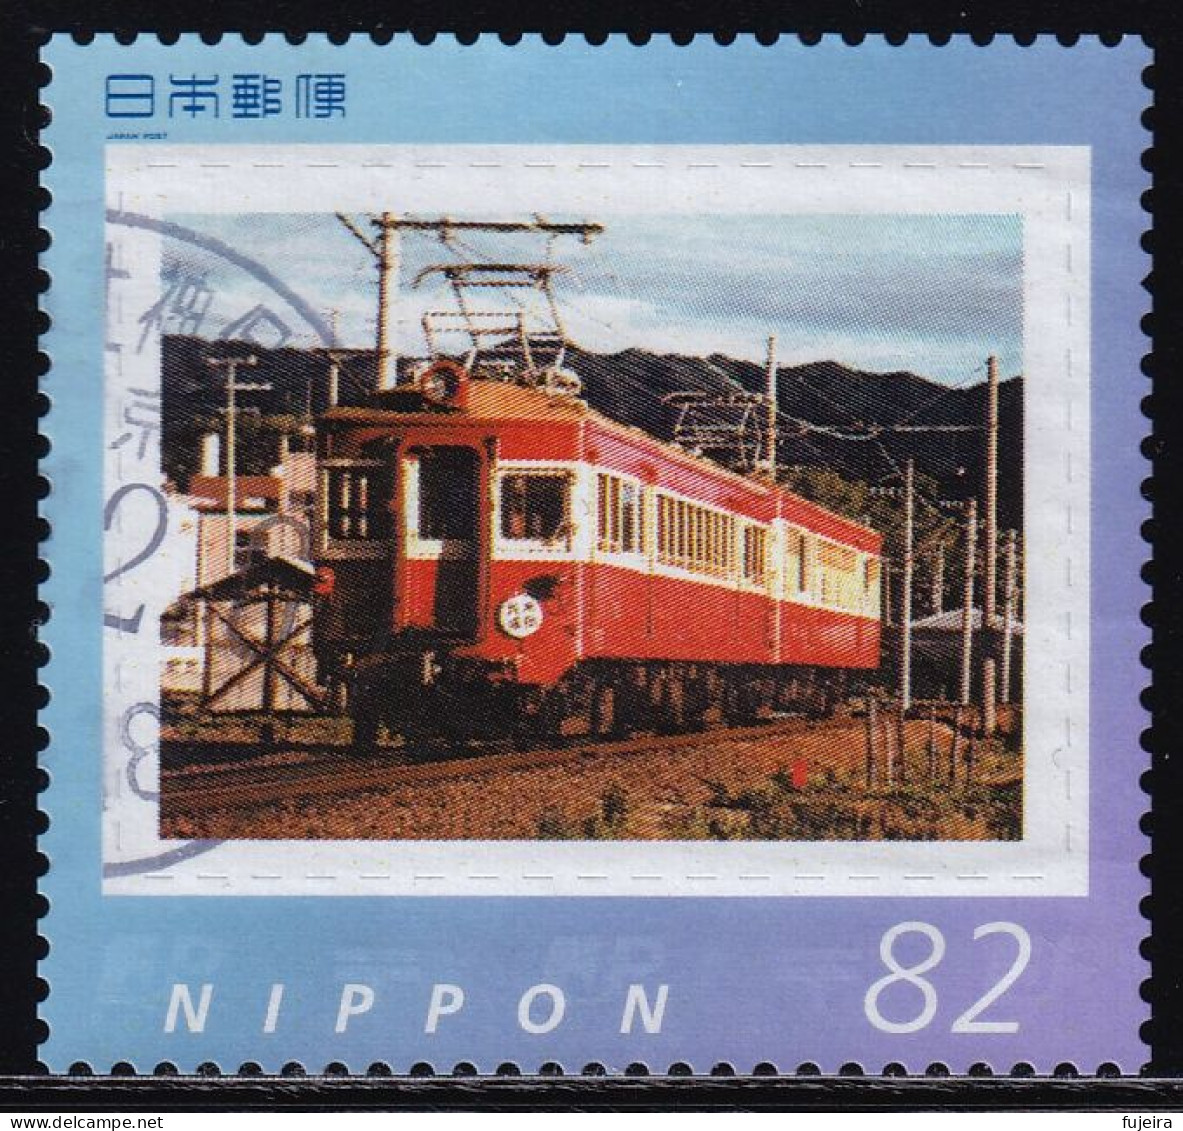 Japan Personalized Stamp, Train (jpv9666) Used - Gebraucht